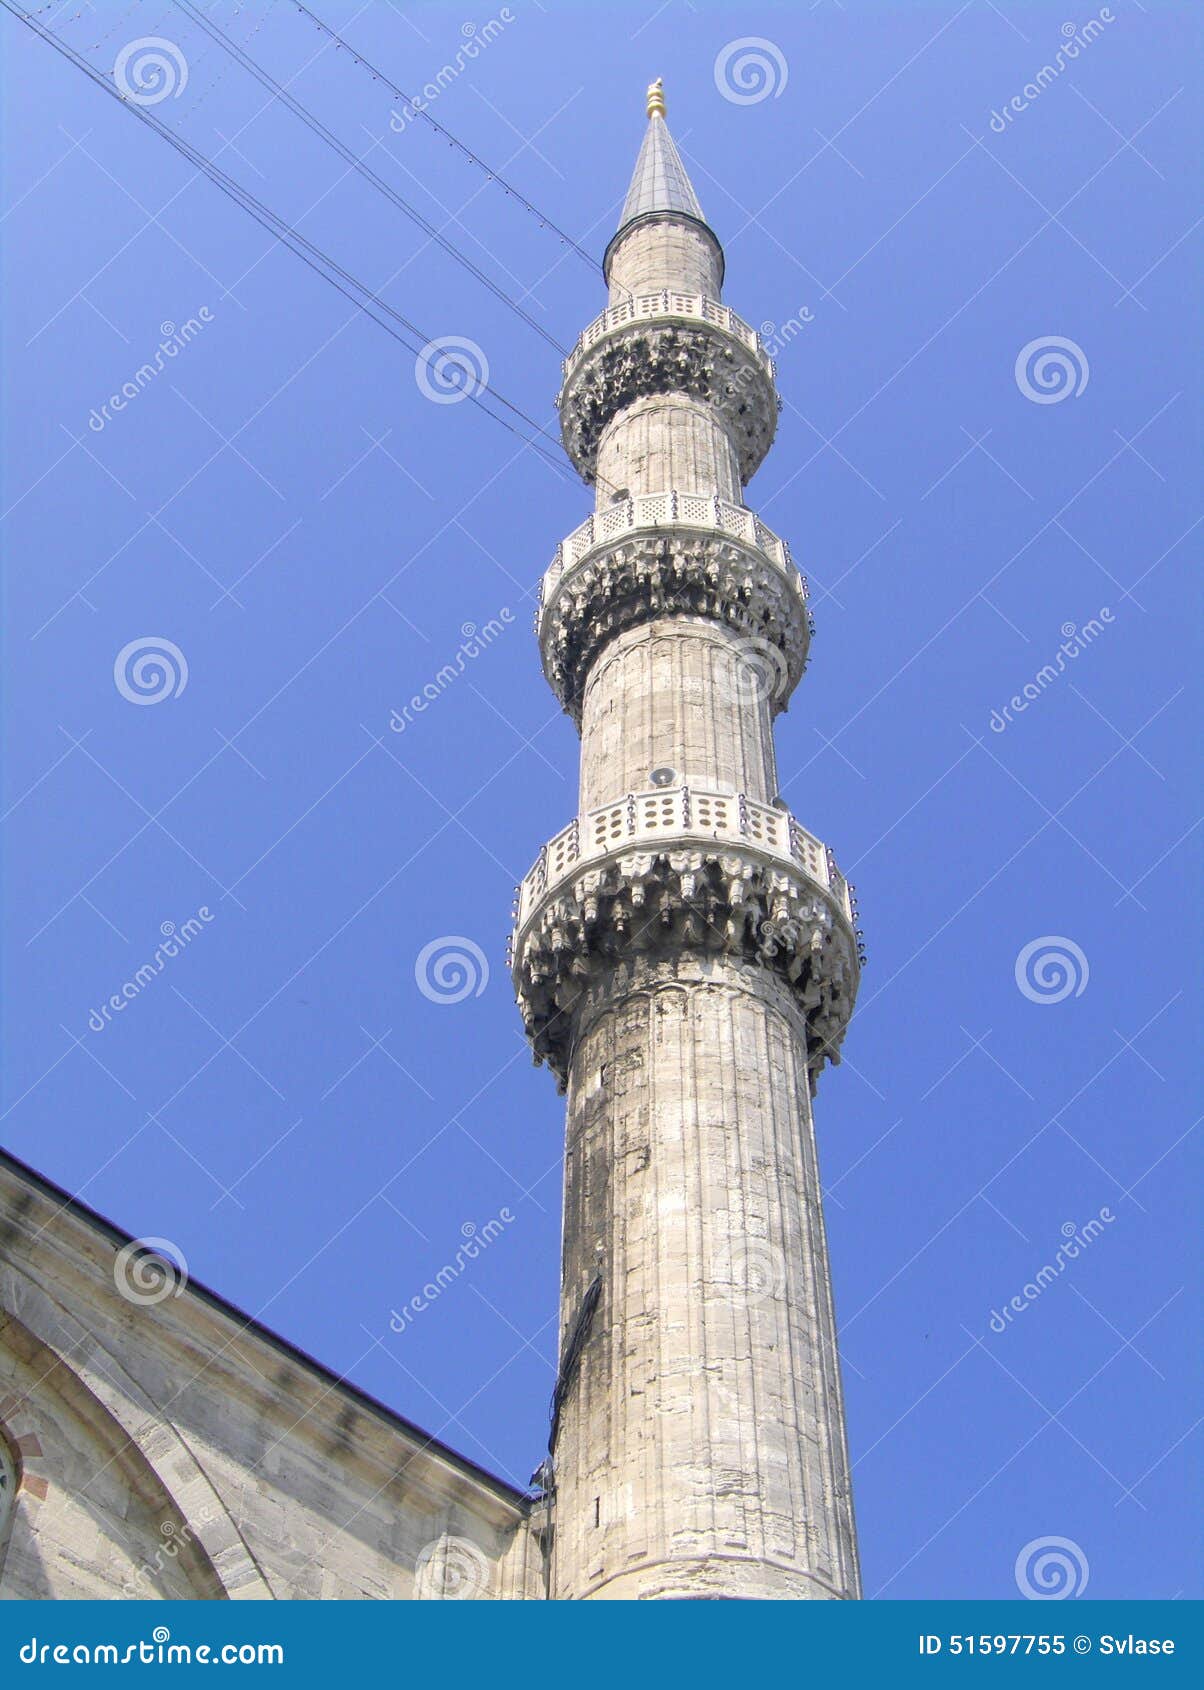 minaret of sultan ahmed mosque